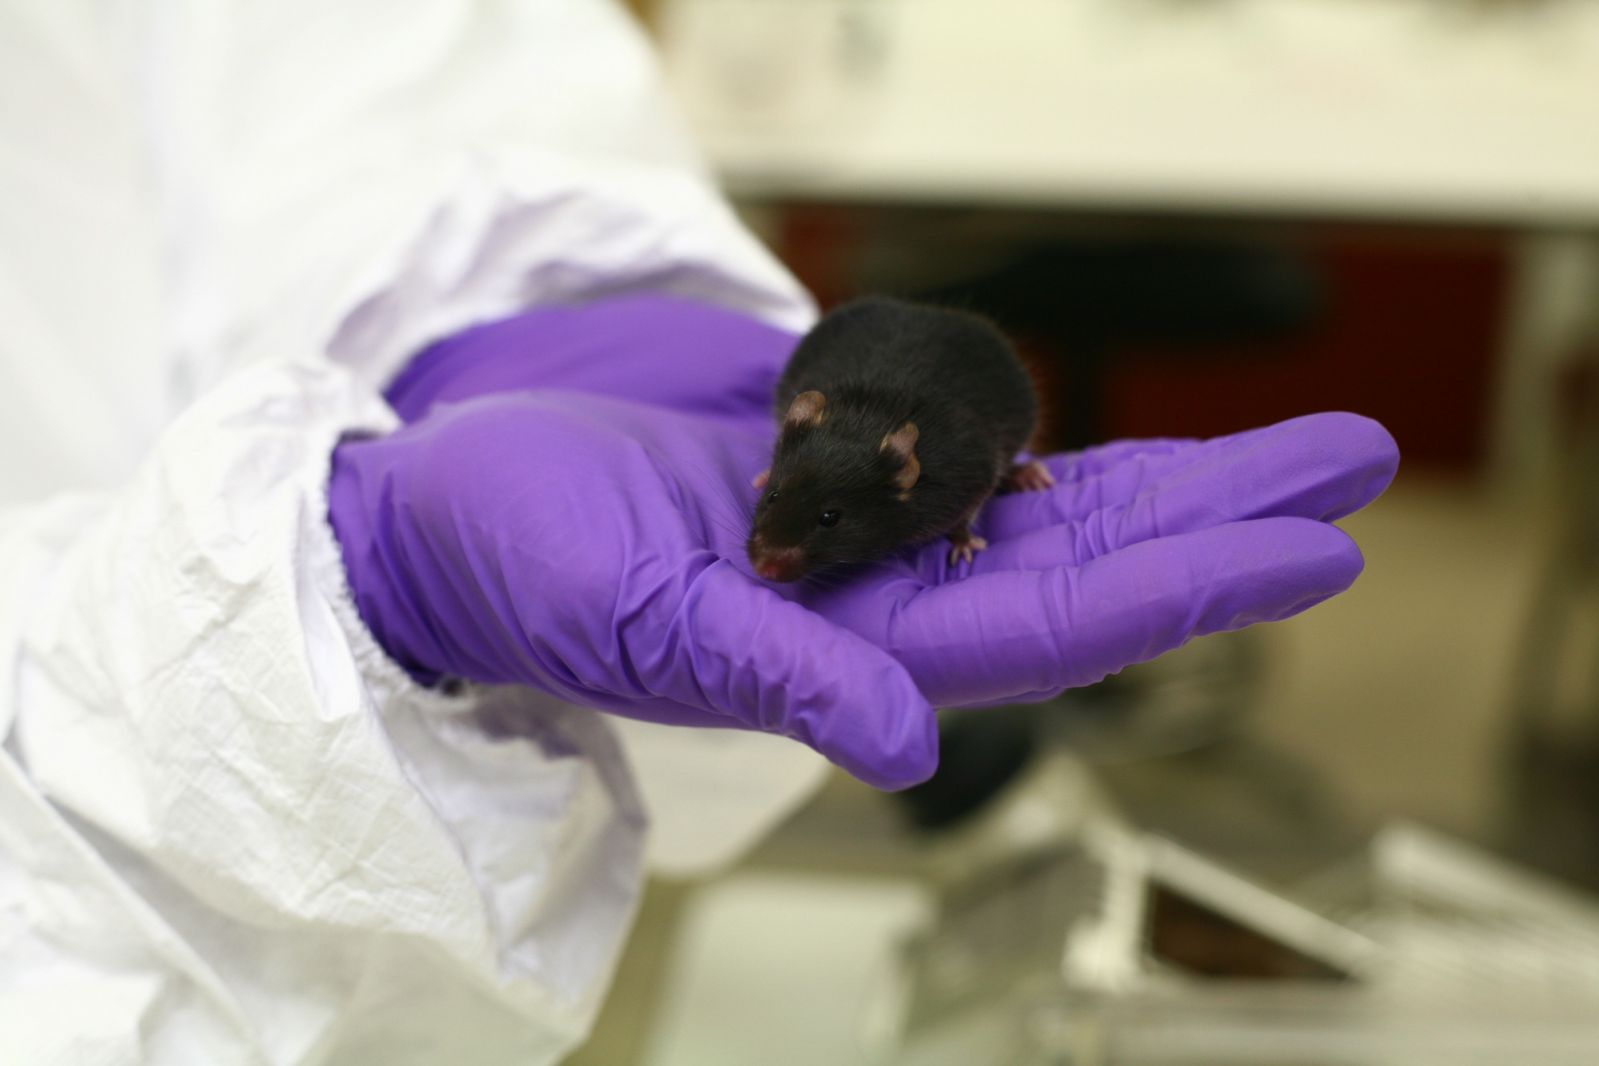 Black mouse in purple glove